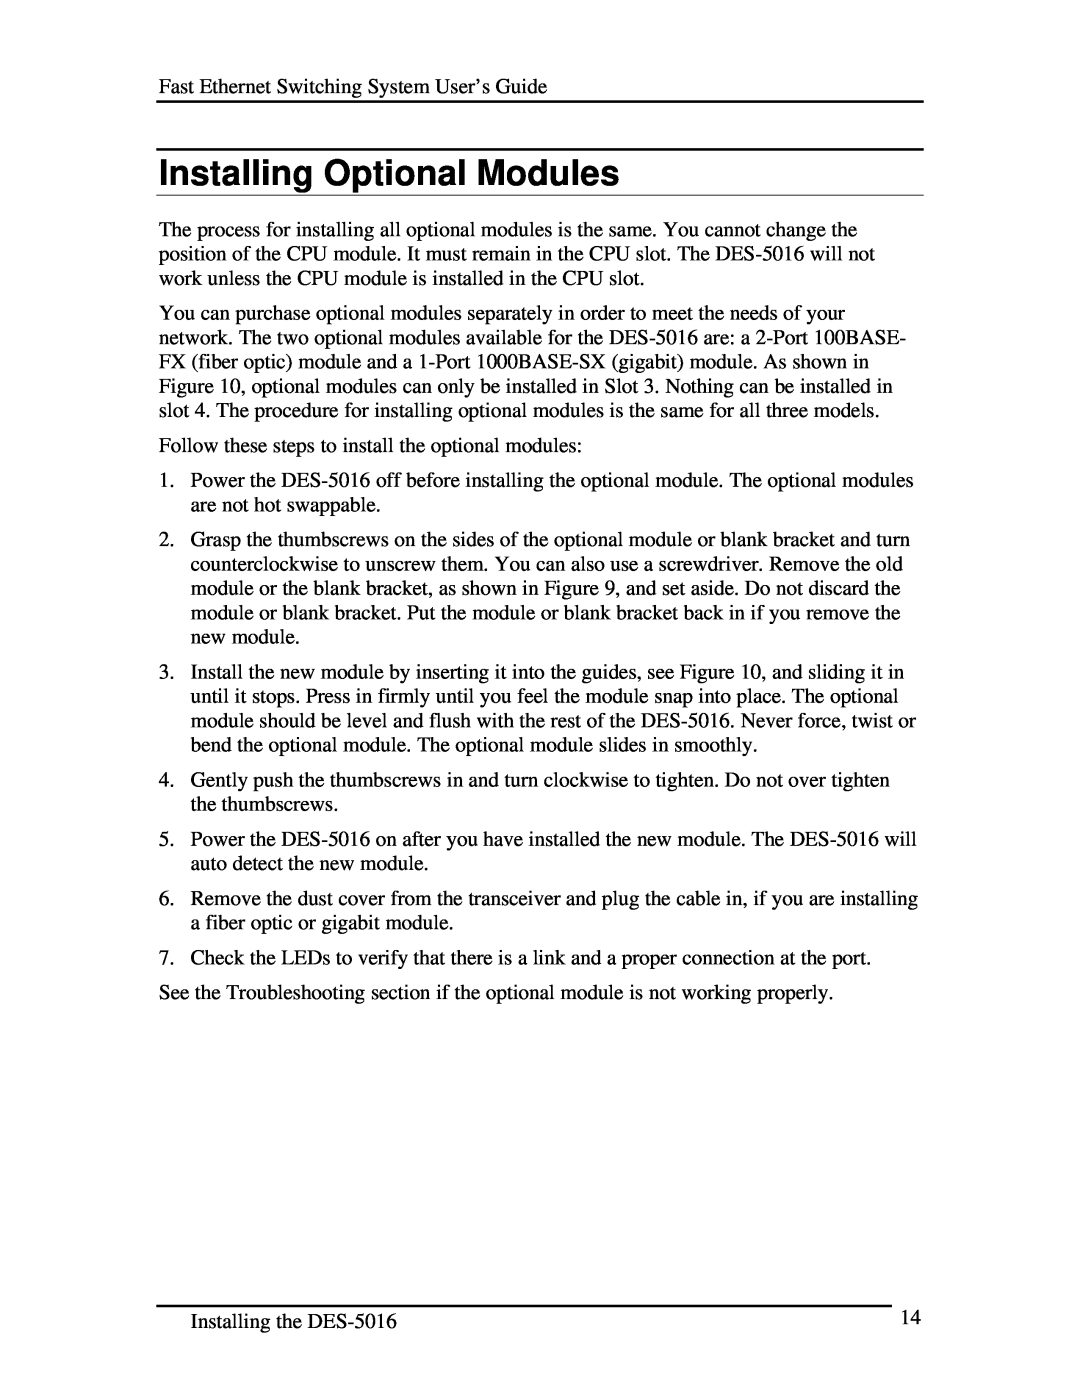 D-Link DES-5016 manual Installing Optional Modules 